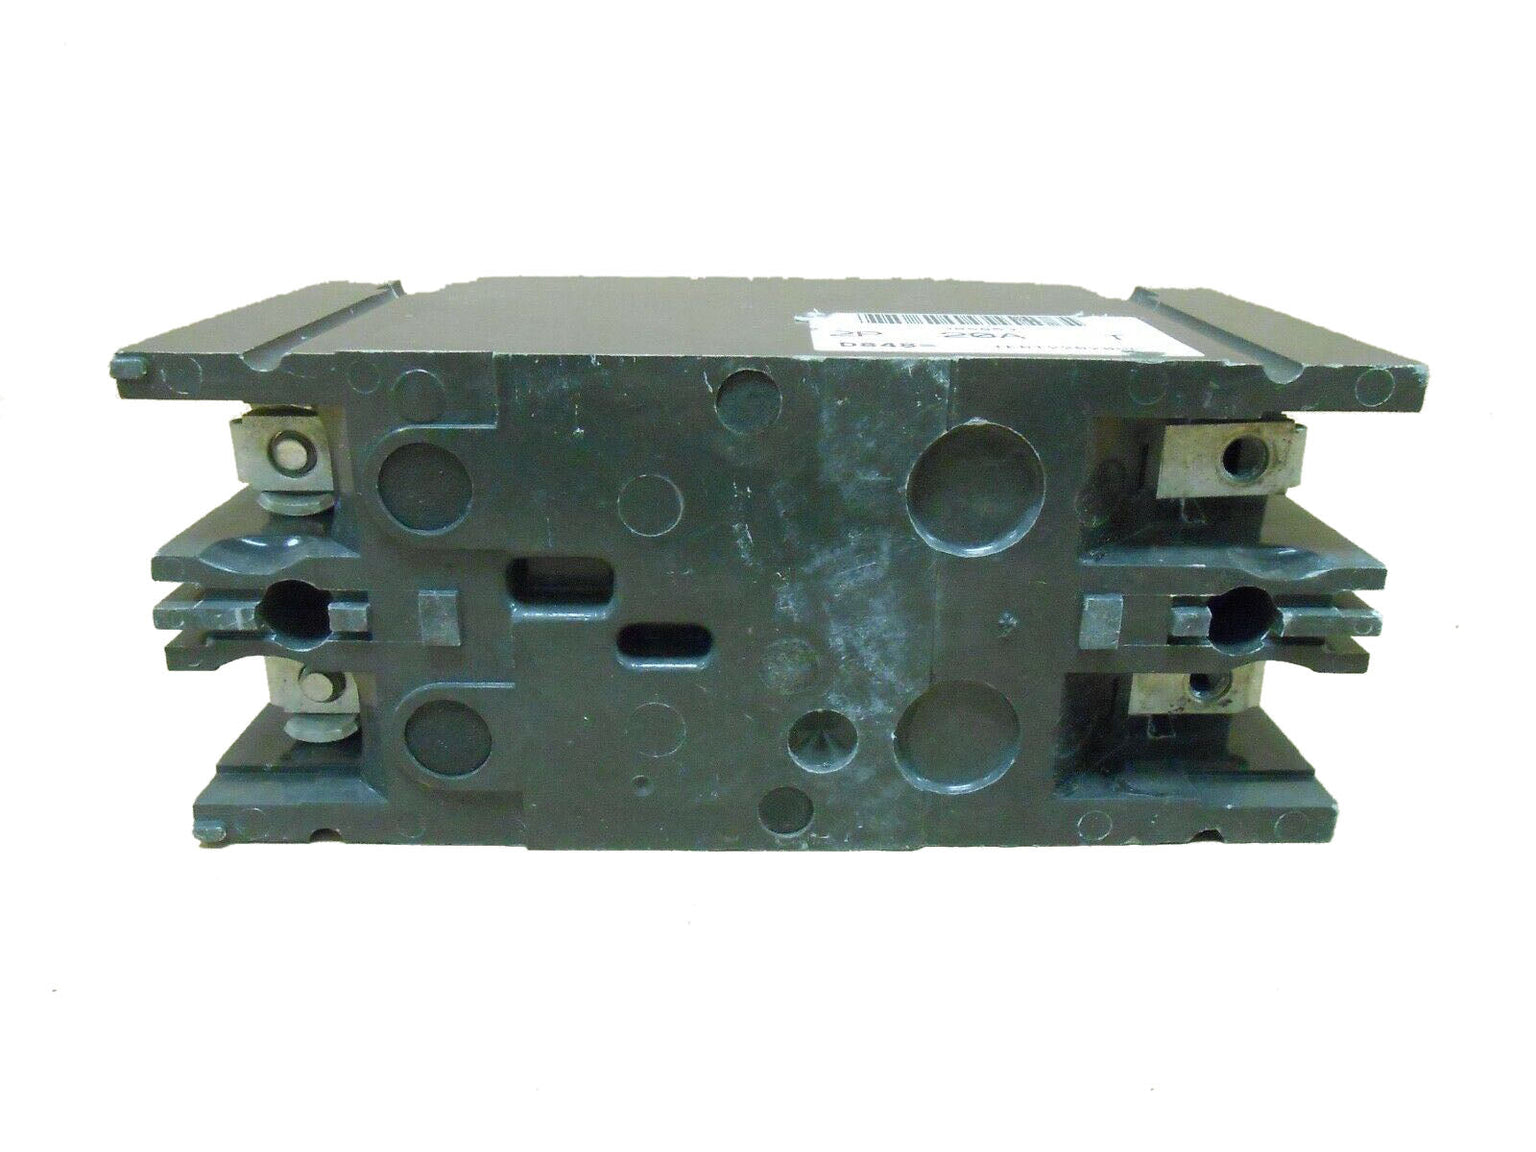 TEB122050 - GE - Molded Case Circuit Breaker